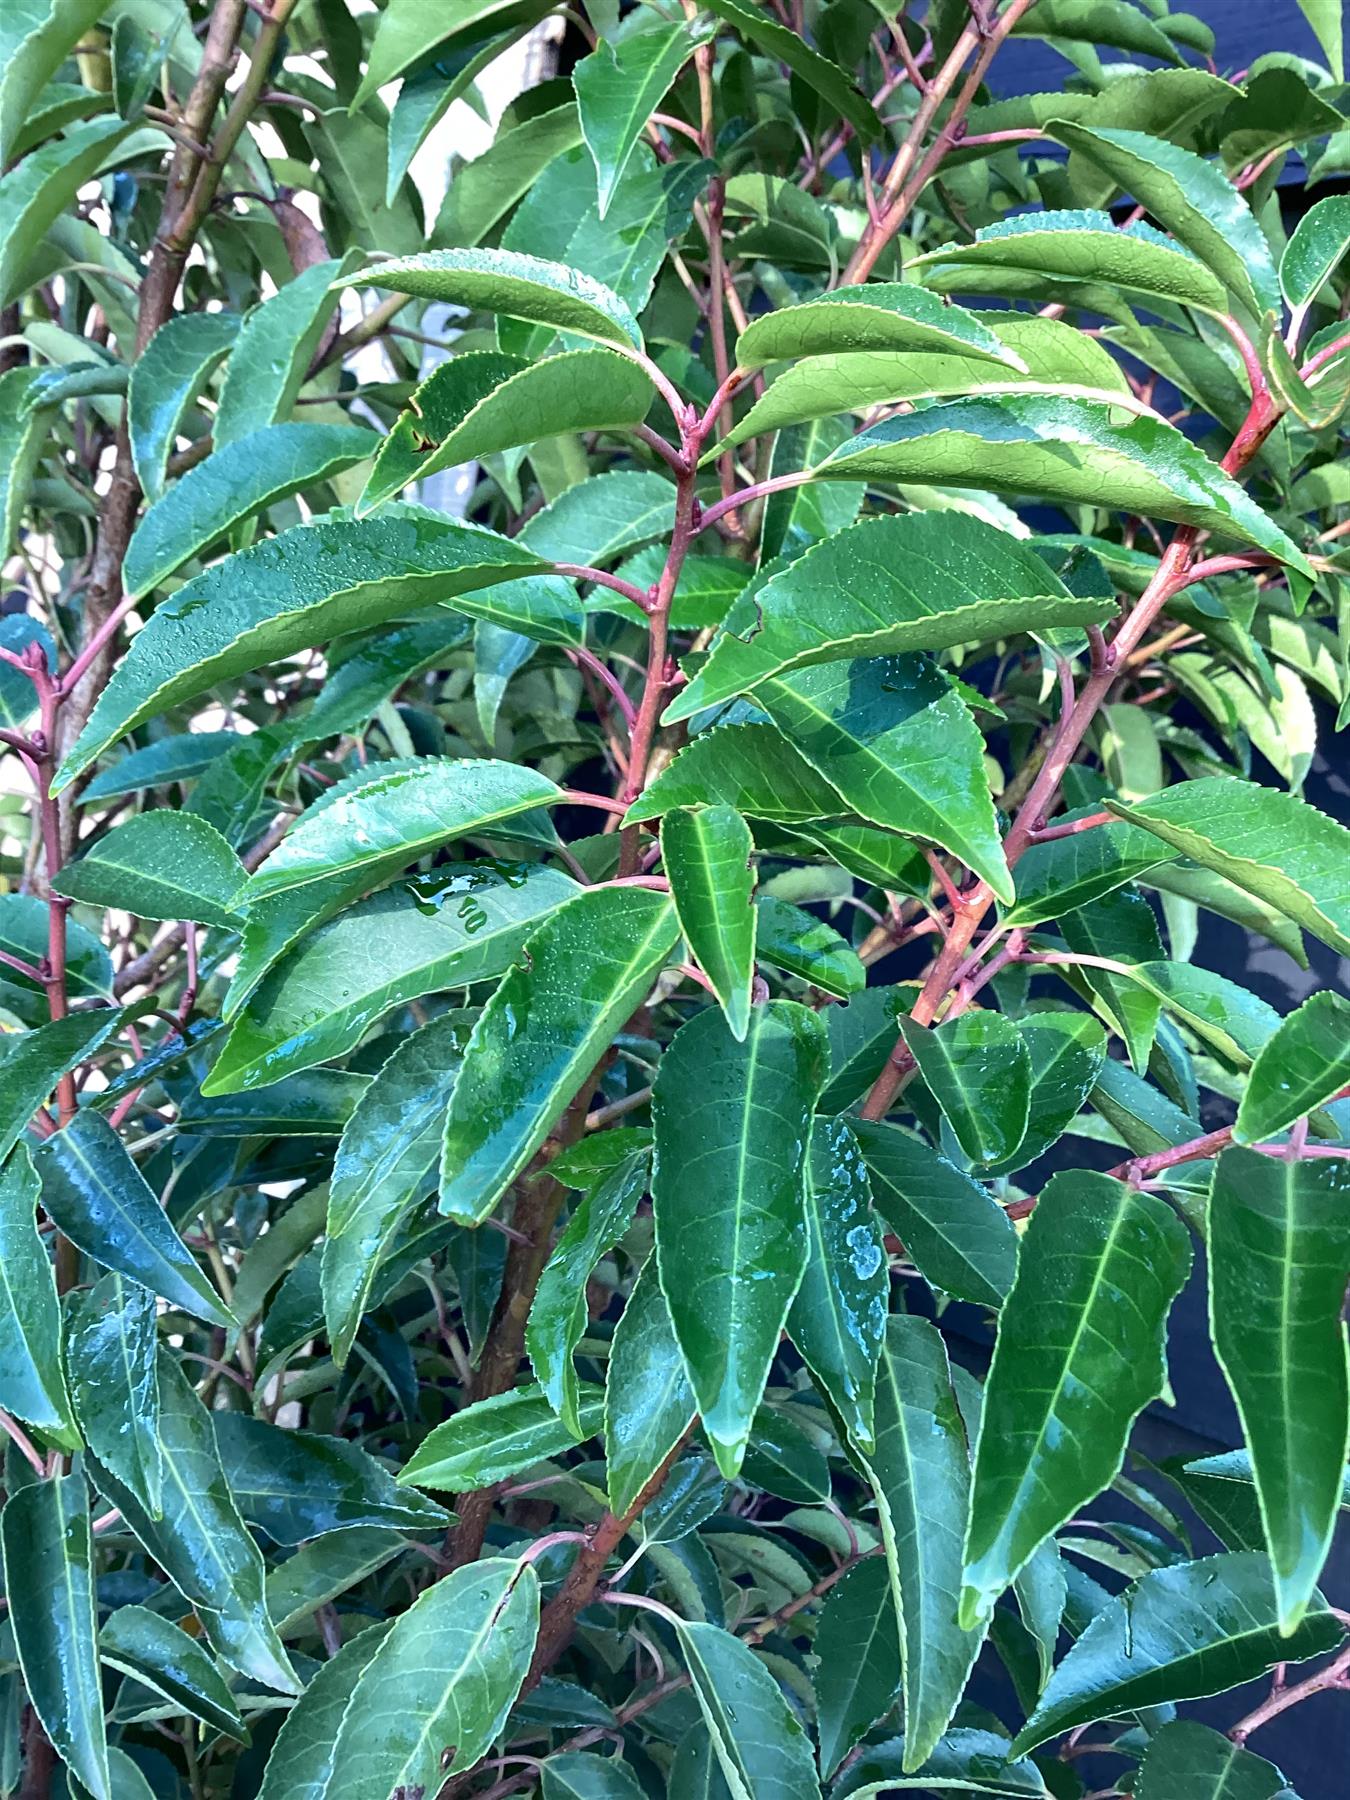 Prunus lusitanica 'Myrtifolia' - 30lt